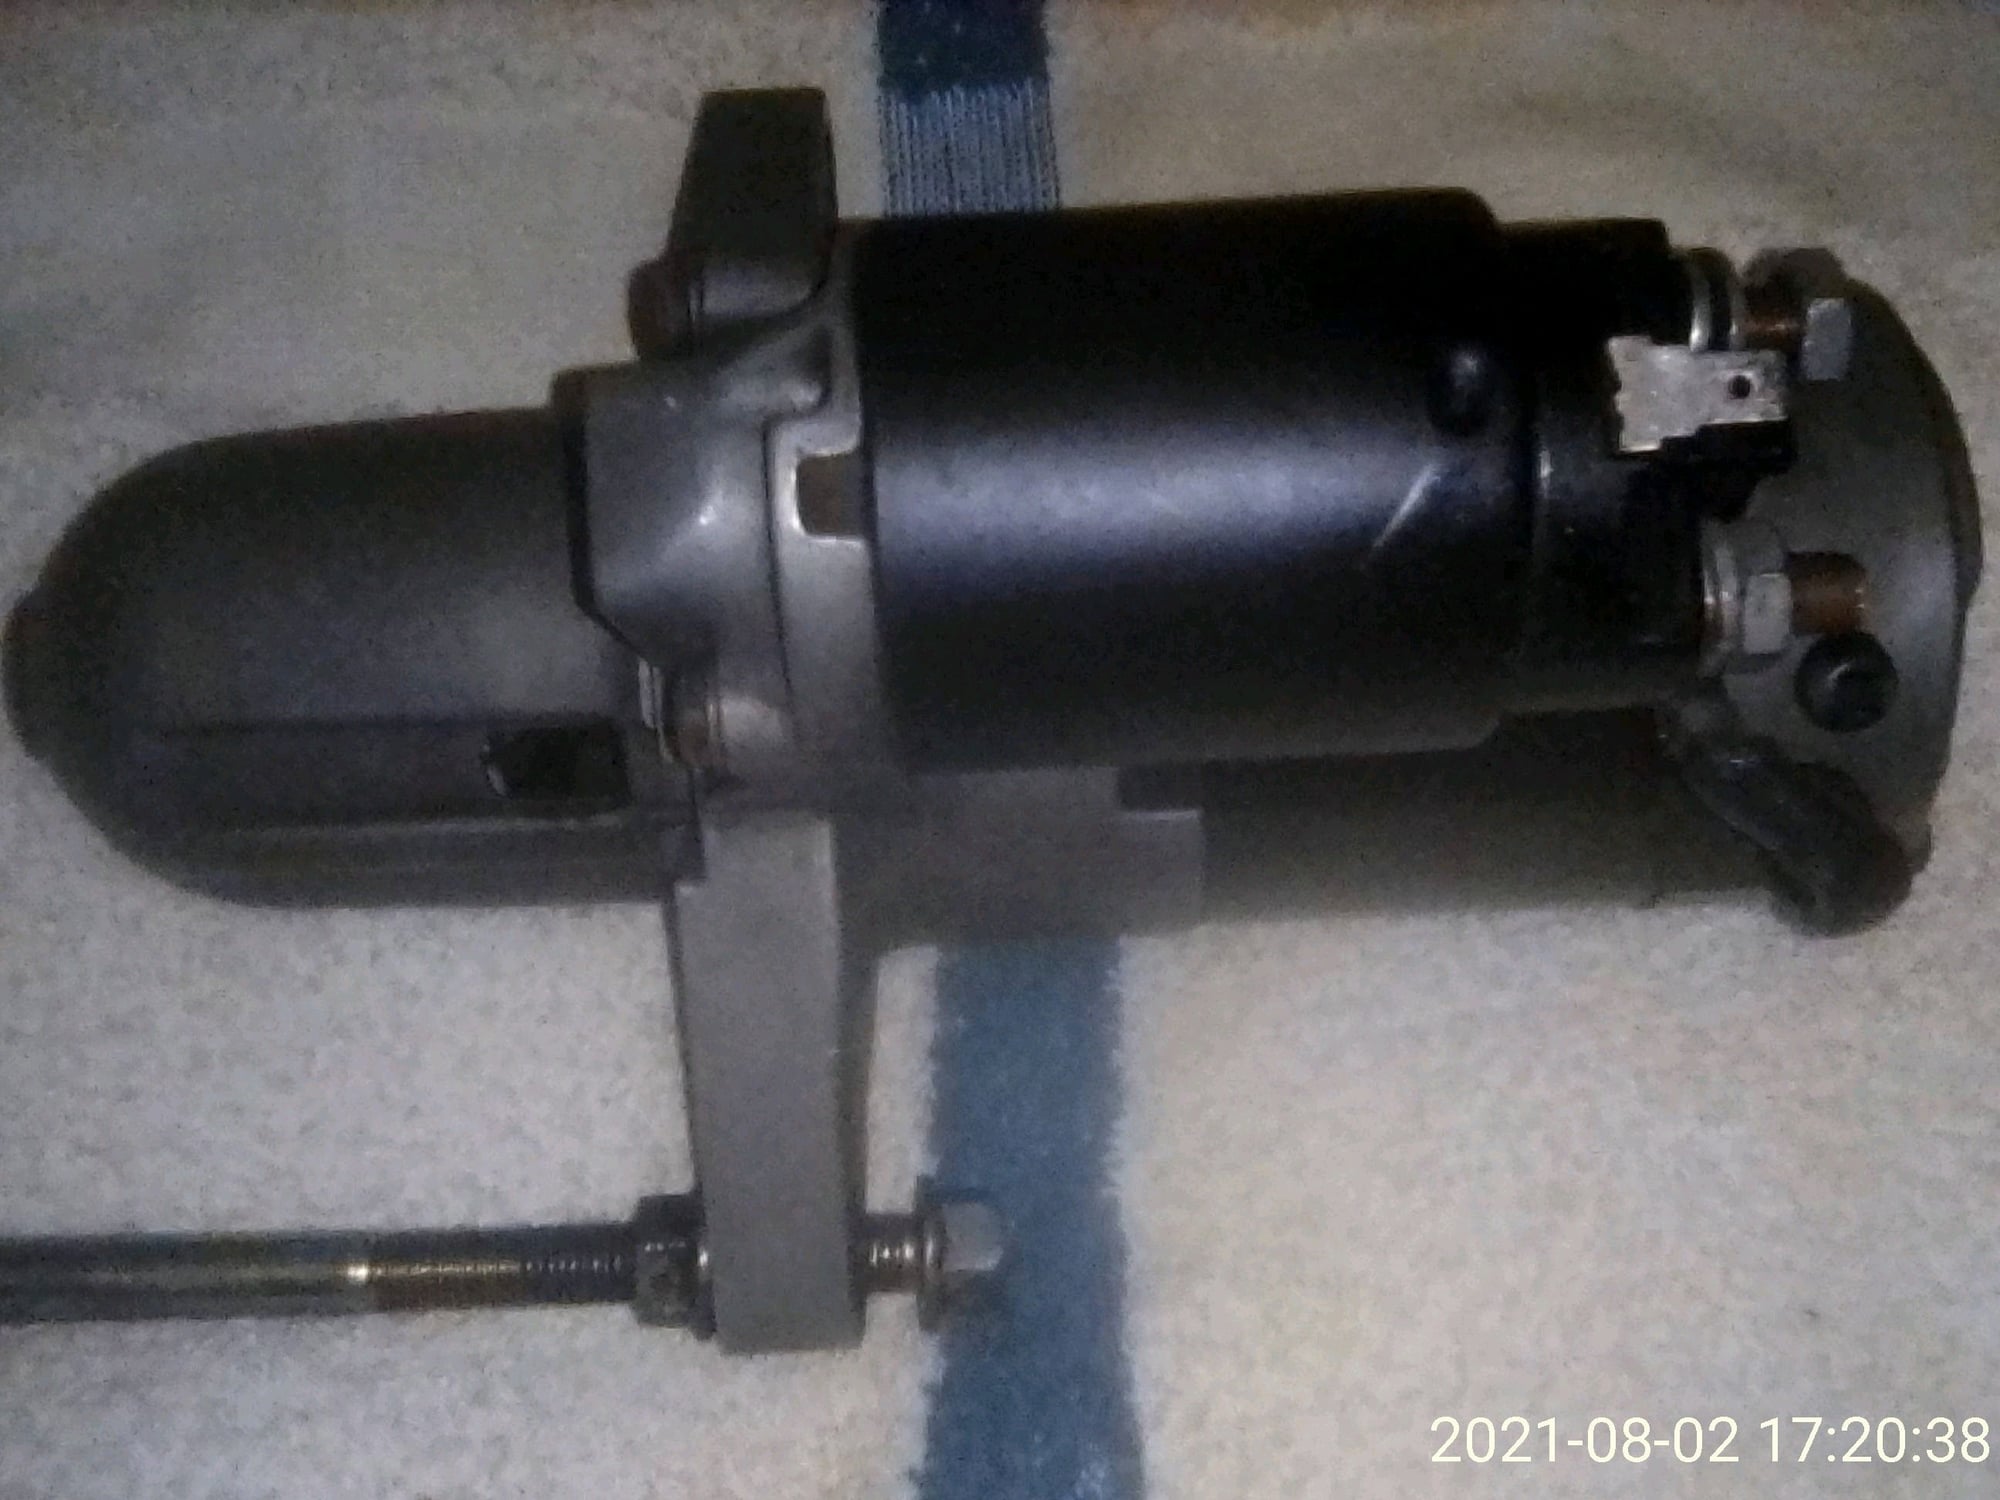 Engine - Electrical - FD - OEM Starter Unit - Used - 1993 to 1995 Mazda RX-7 - San Jose, CA 95121, United States